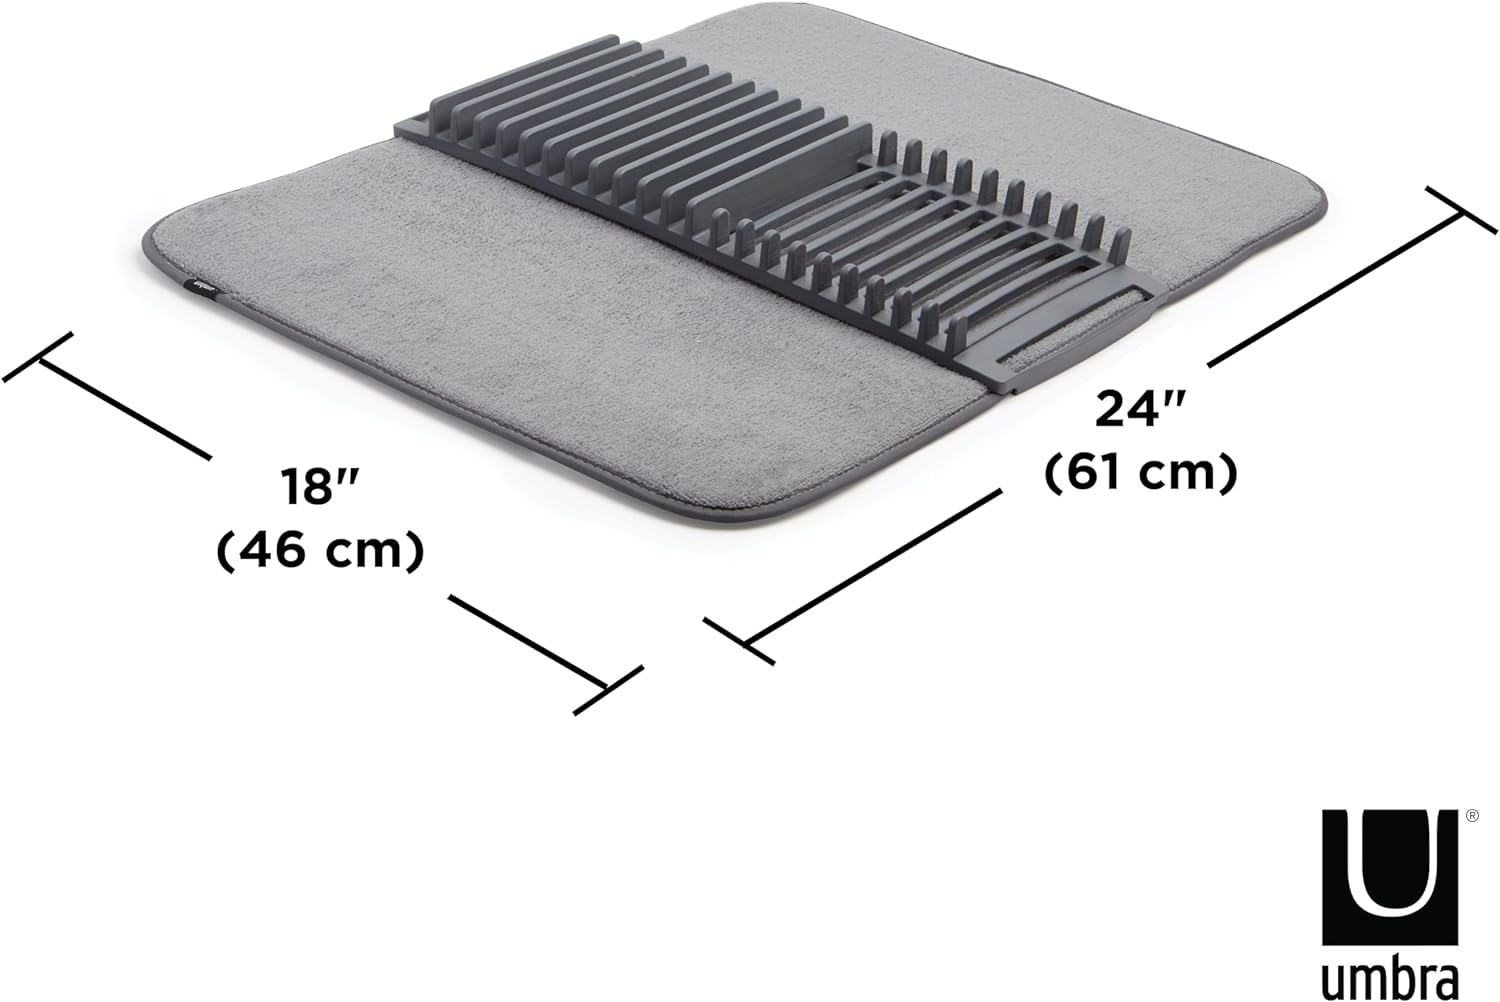 Umbra UDRY Rack and Microfiber Dish Drying Mat